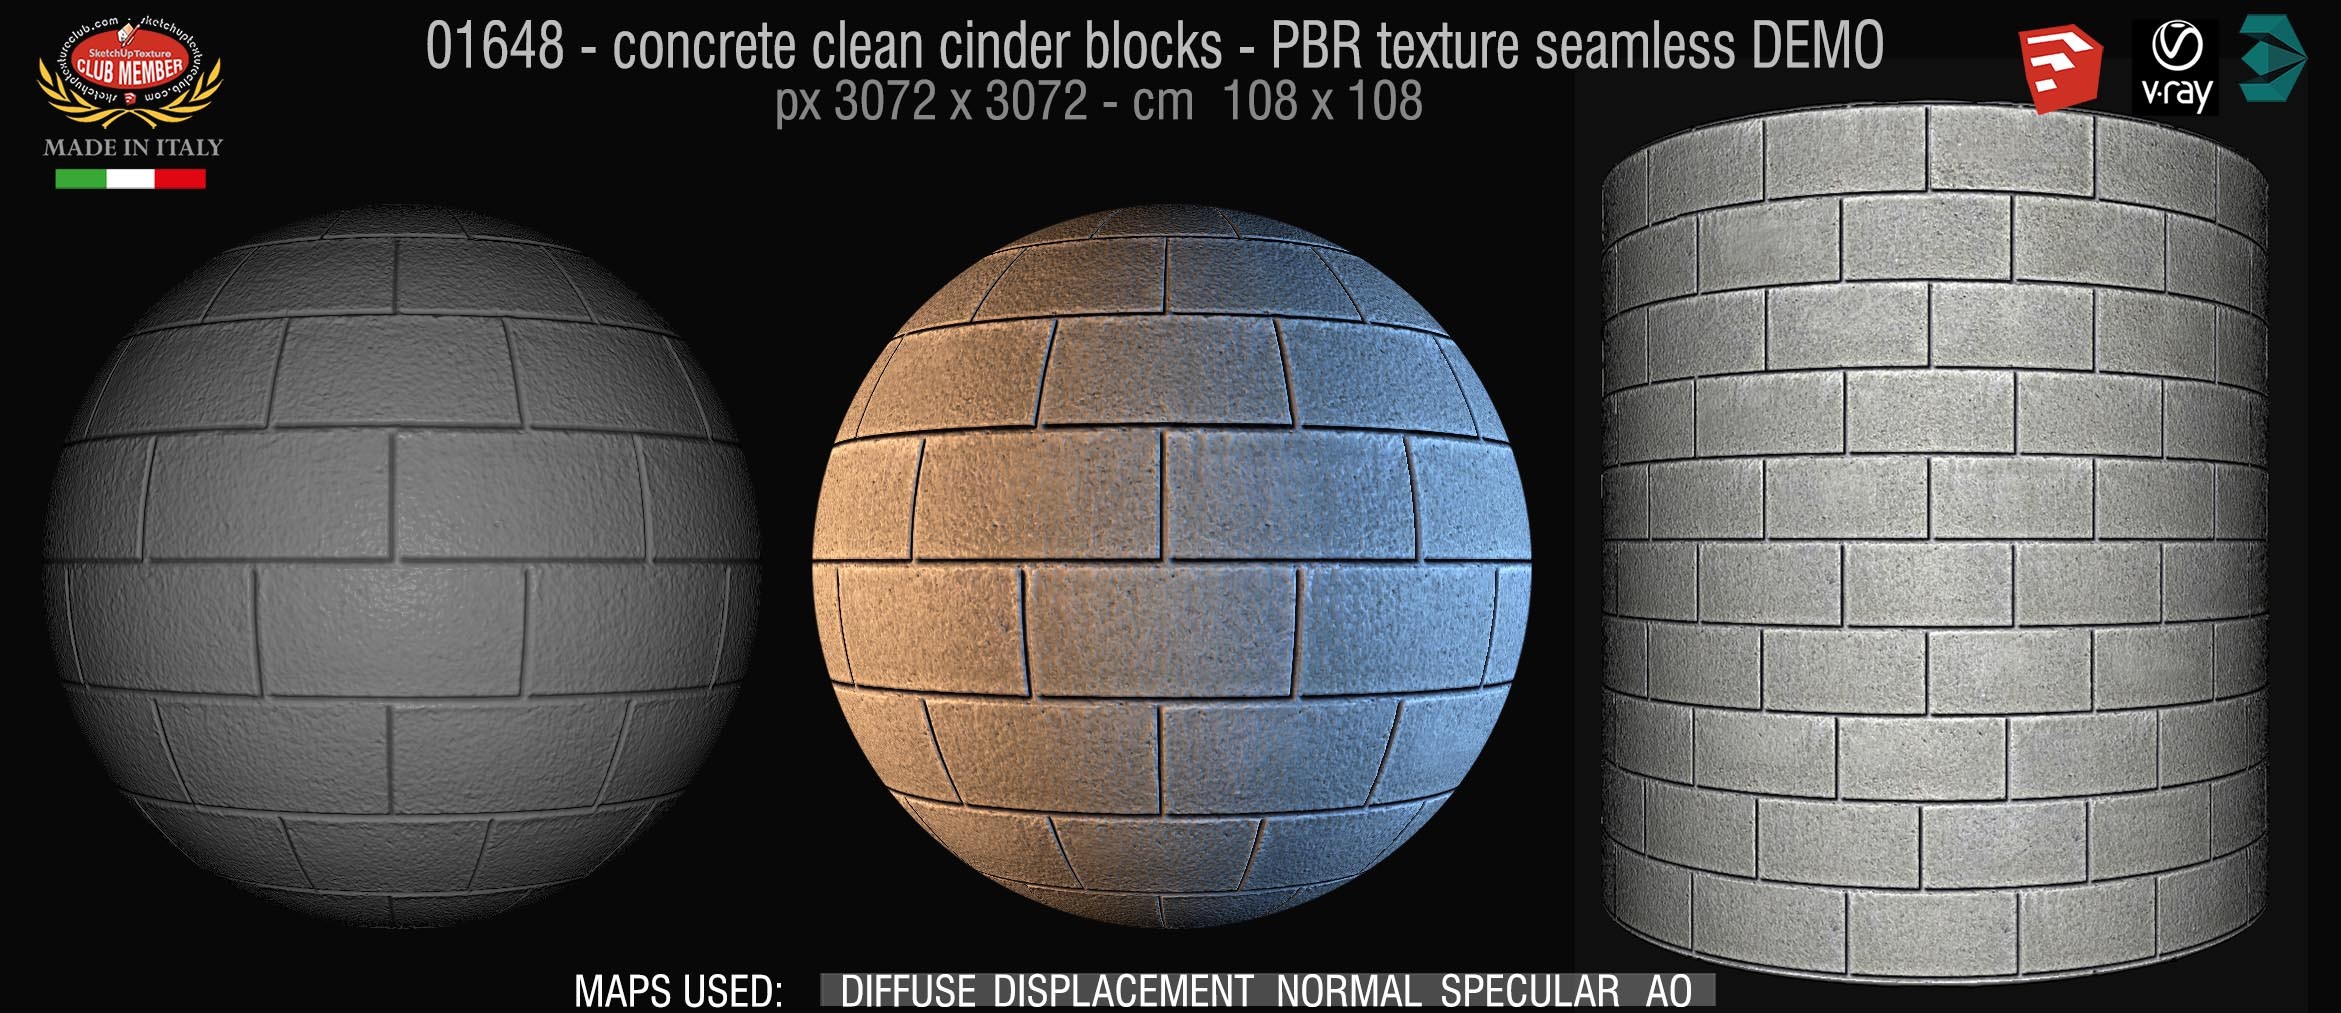 01648 concrete clean cinder blocks PBR texture seamless DEMO